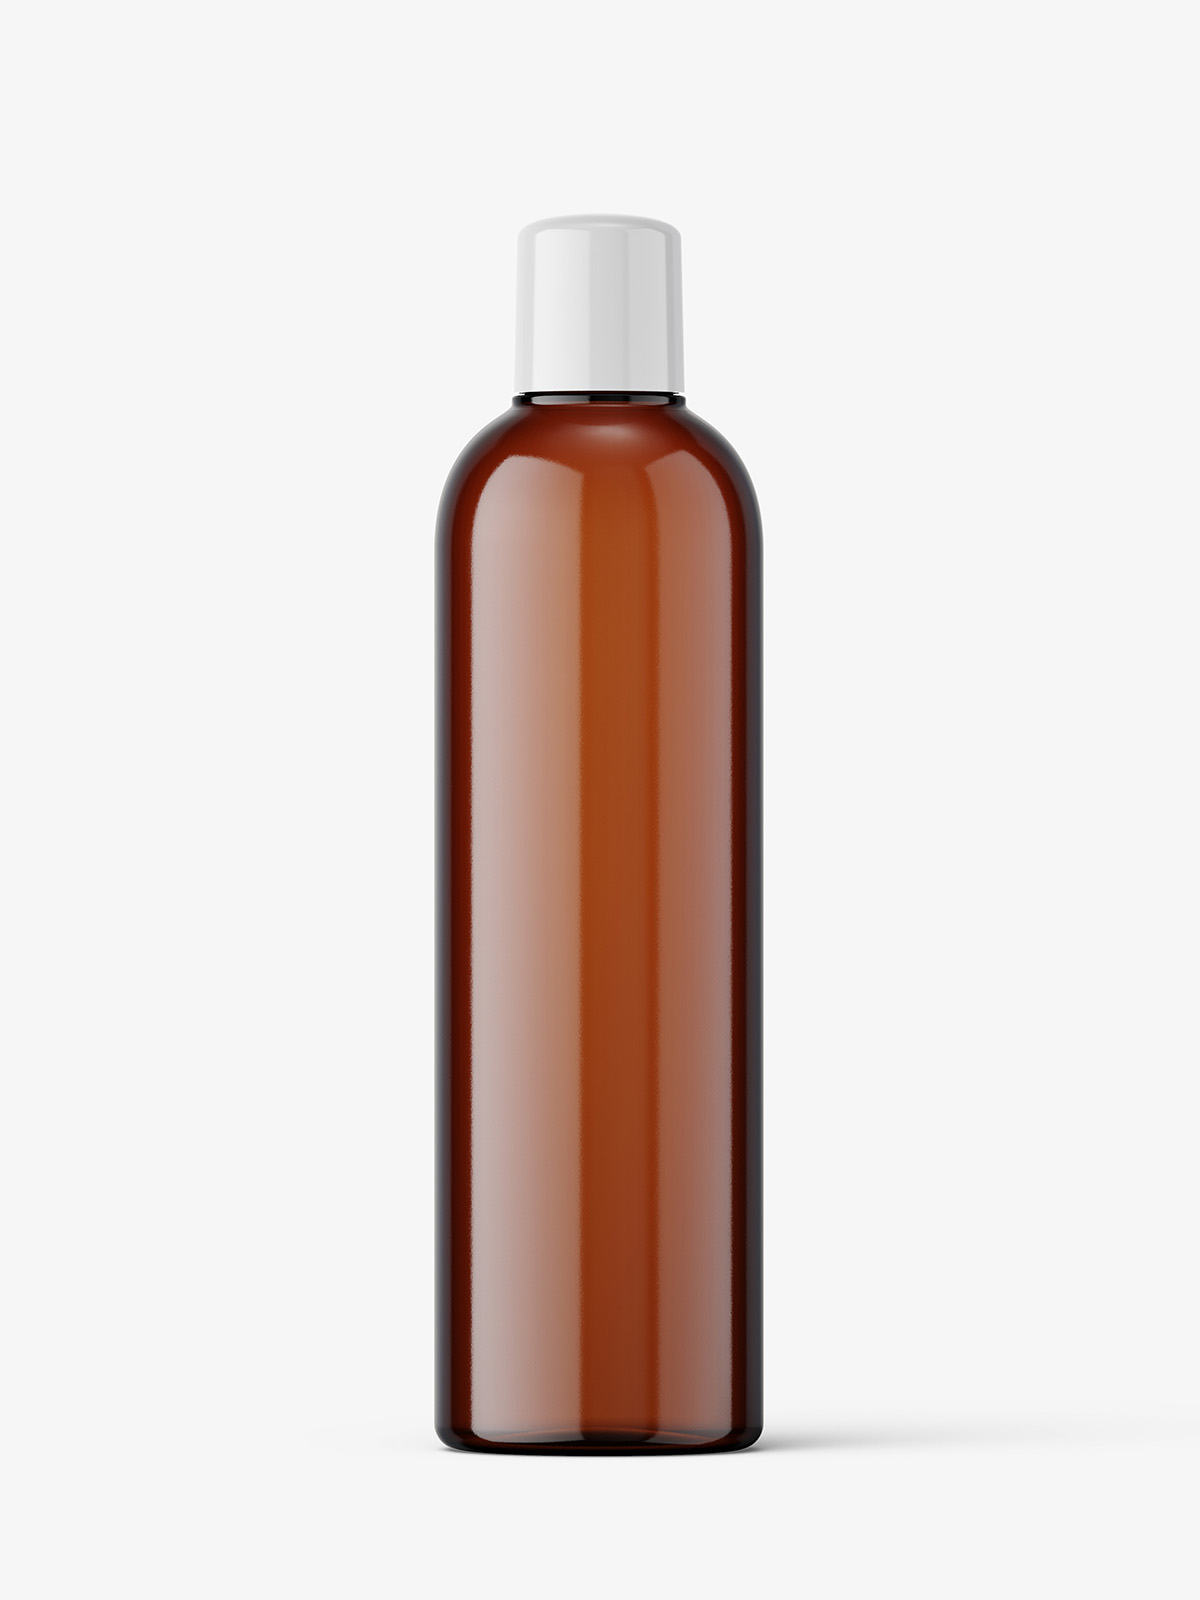 Download Amber bottle mockup with rounded screwcap mockup - Smarty Mockups